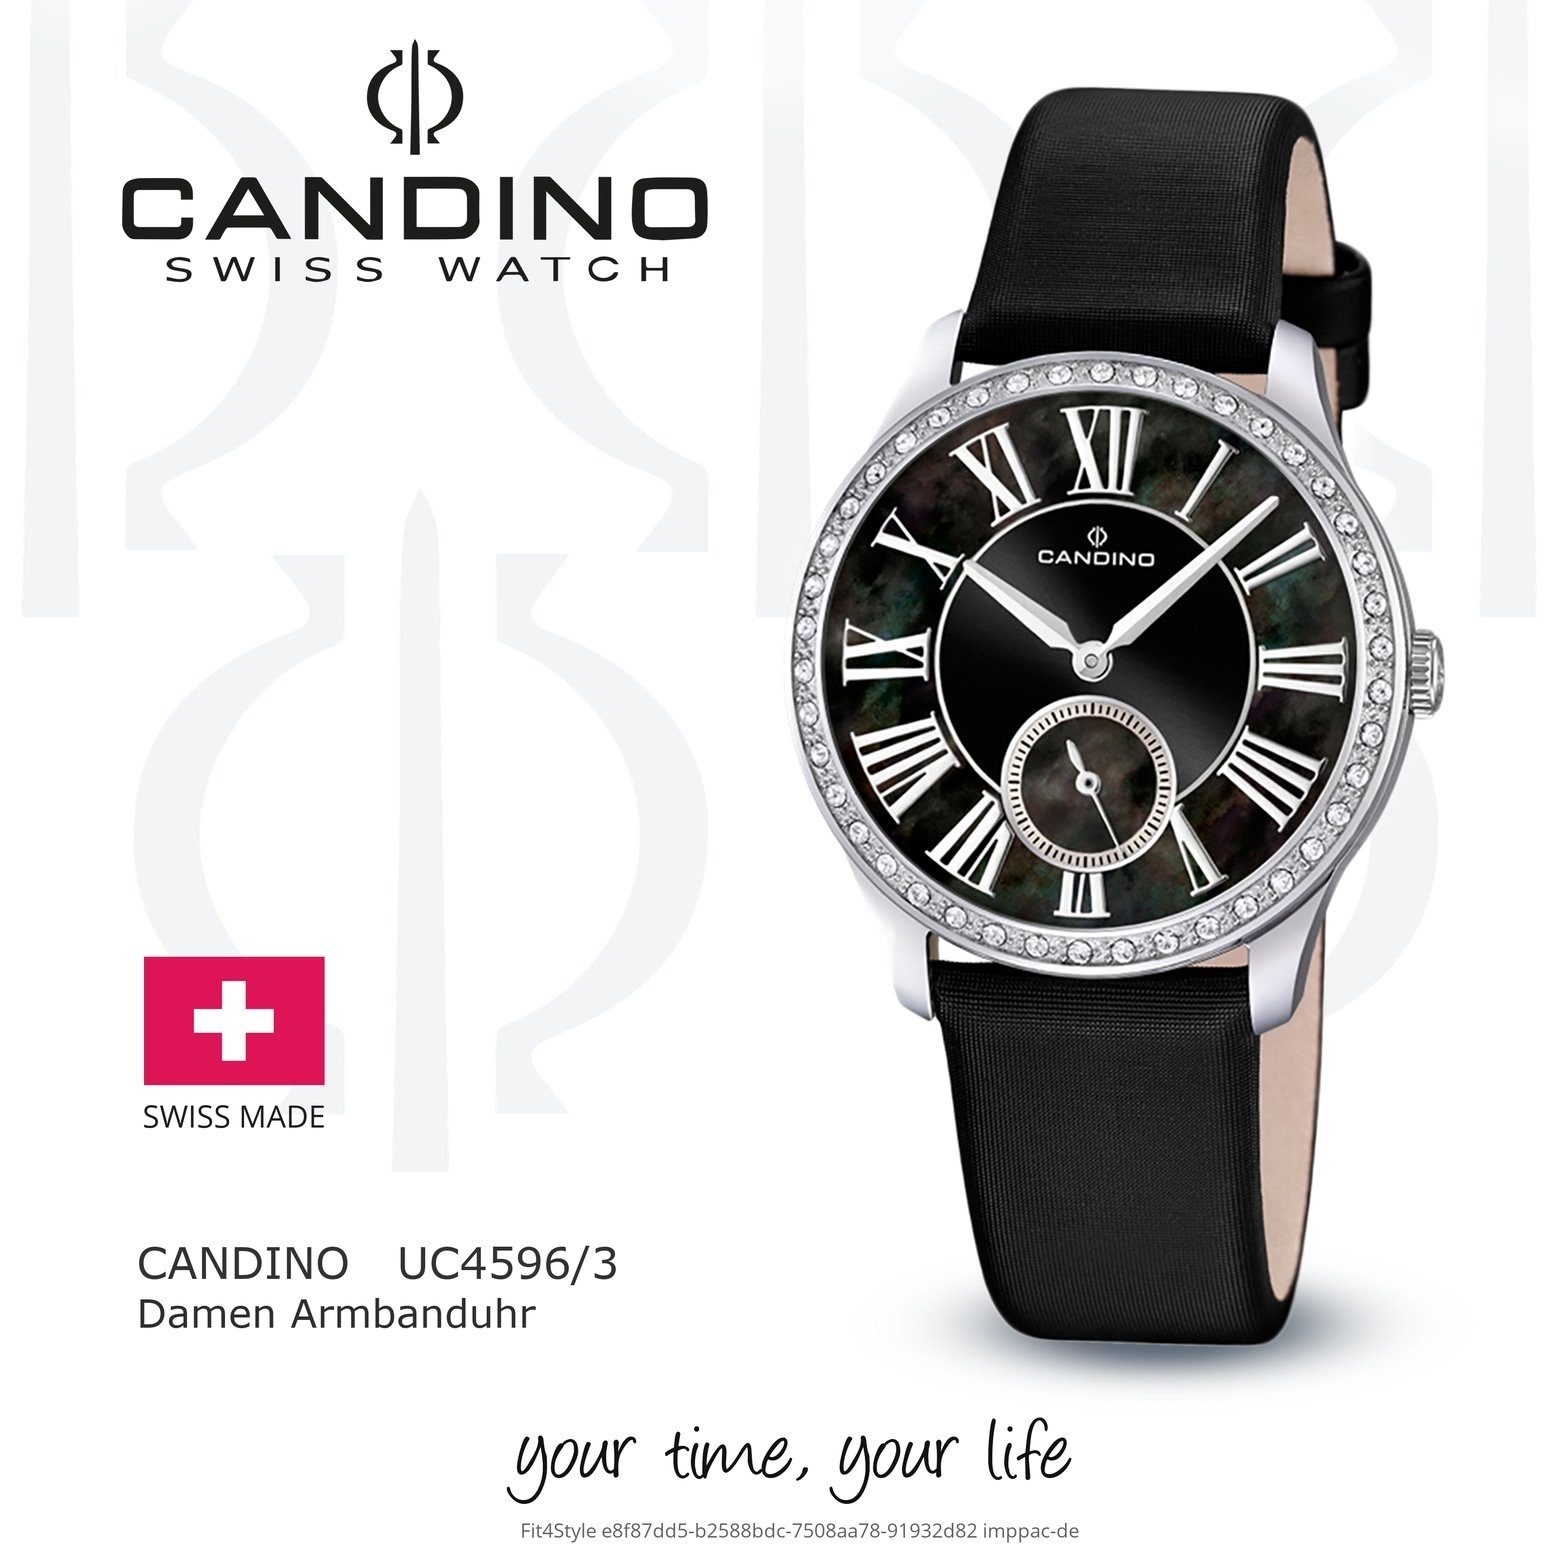 rund, Armbanduhr Quarzuhr Fashion Damen Analog Candino Quarzuhr C4596/3, Candino Lederarmband schwarz, Damen